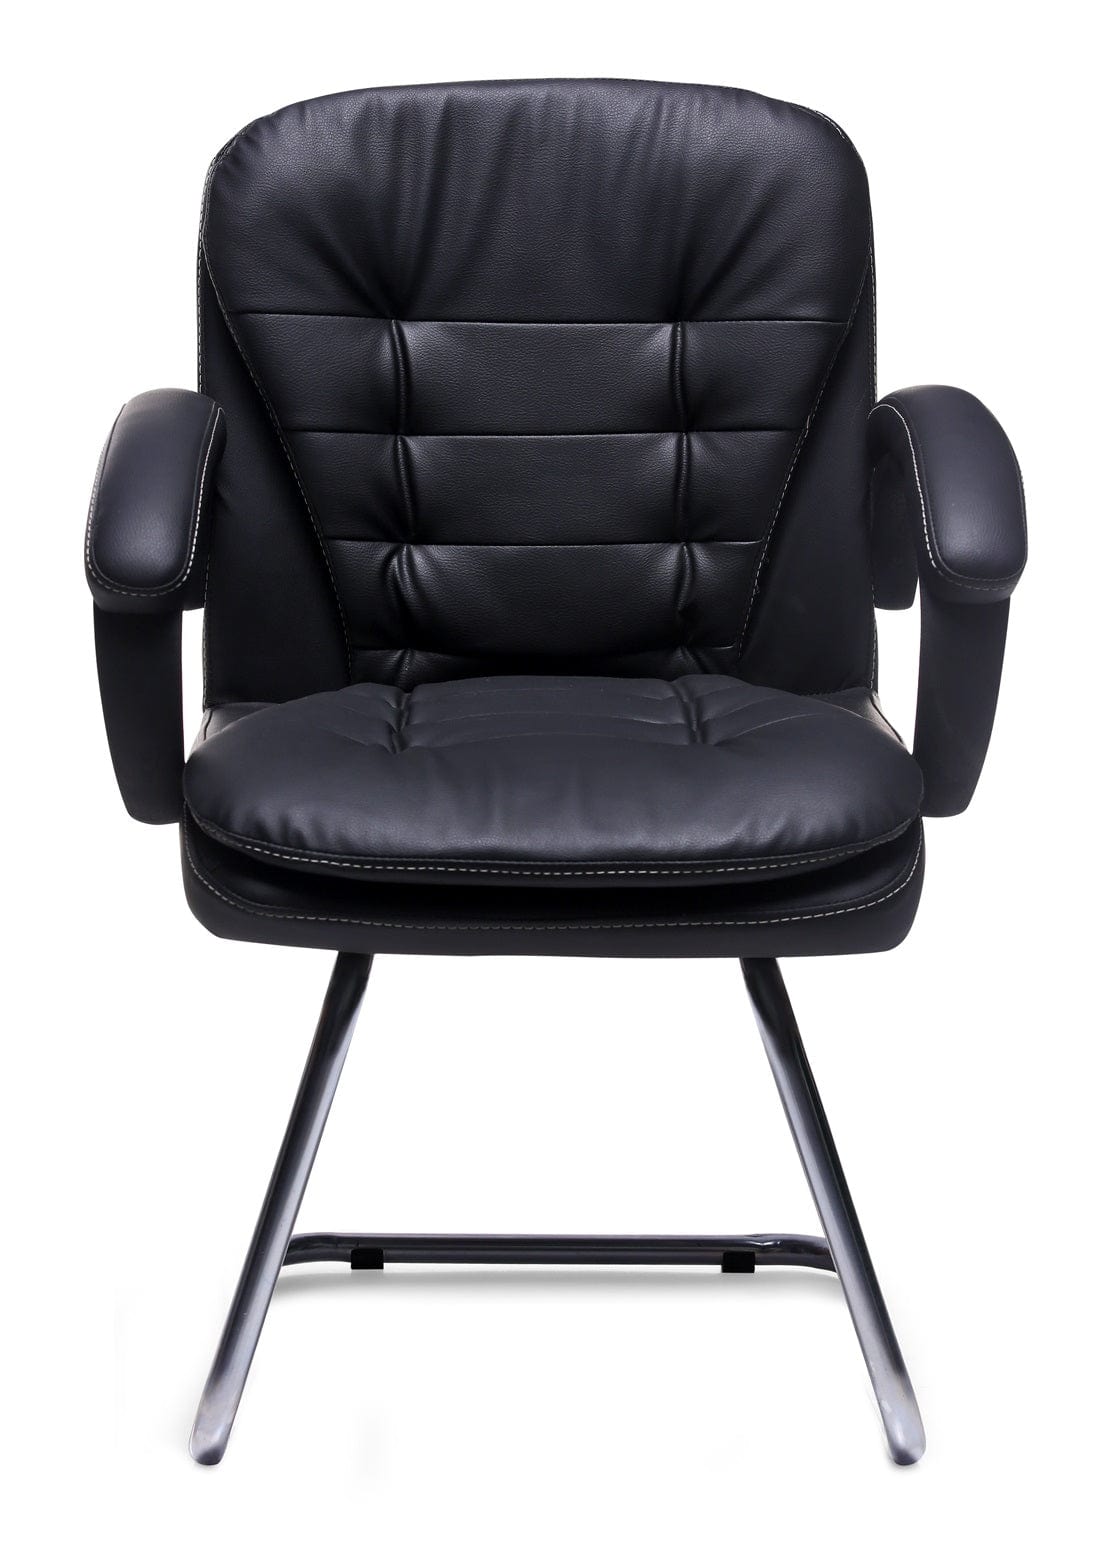 Elegant Cantilever Chair in Black